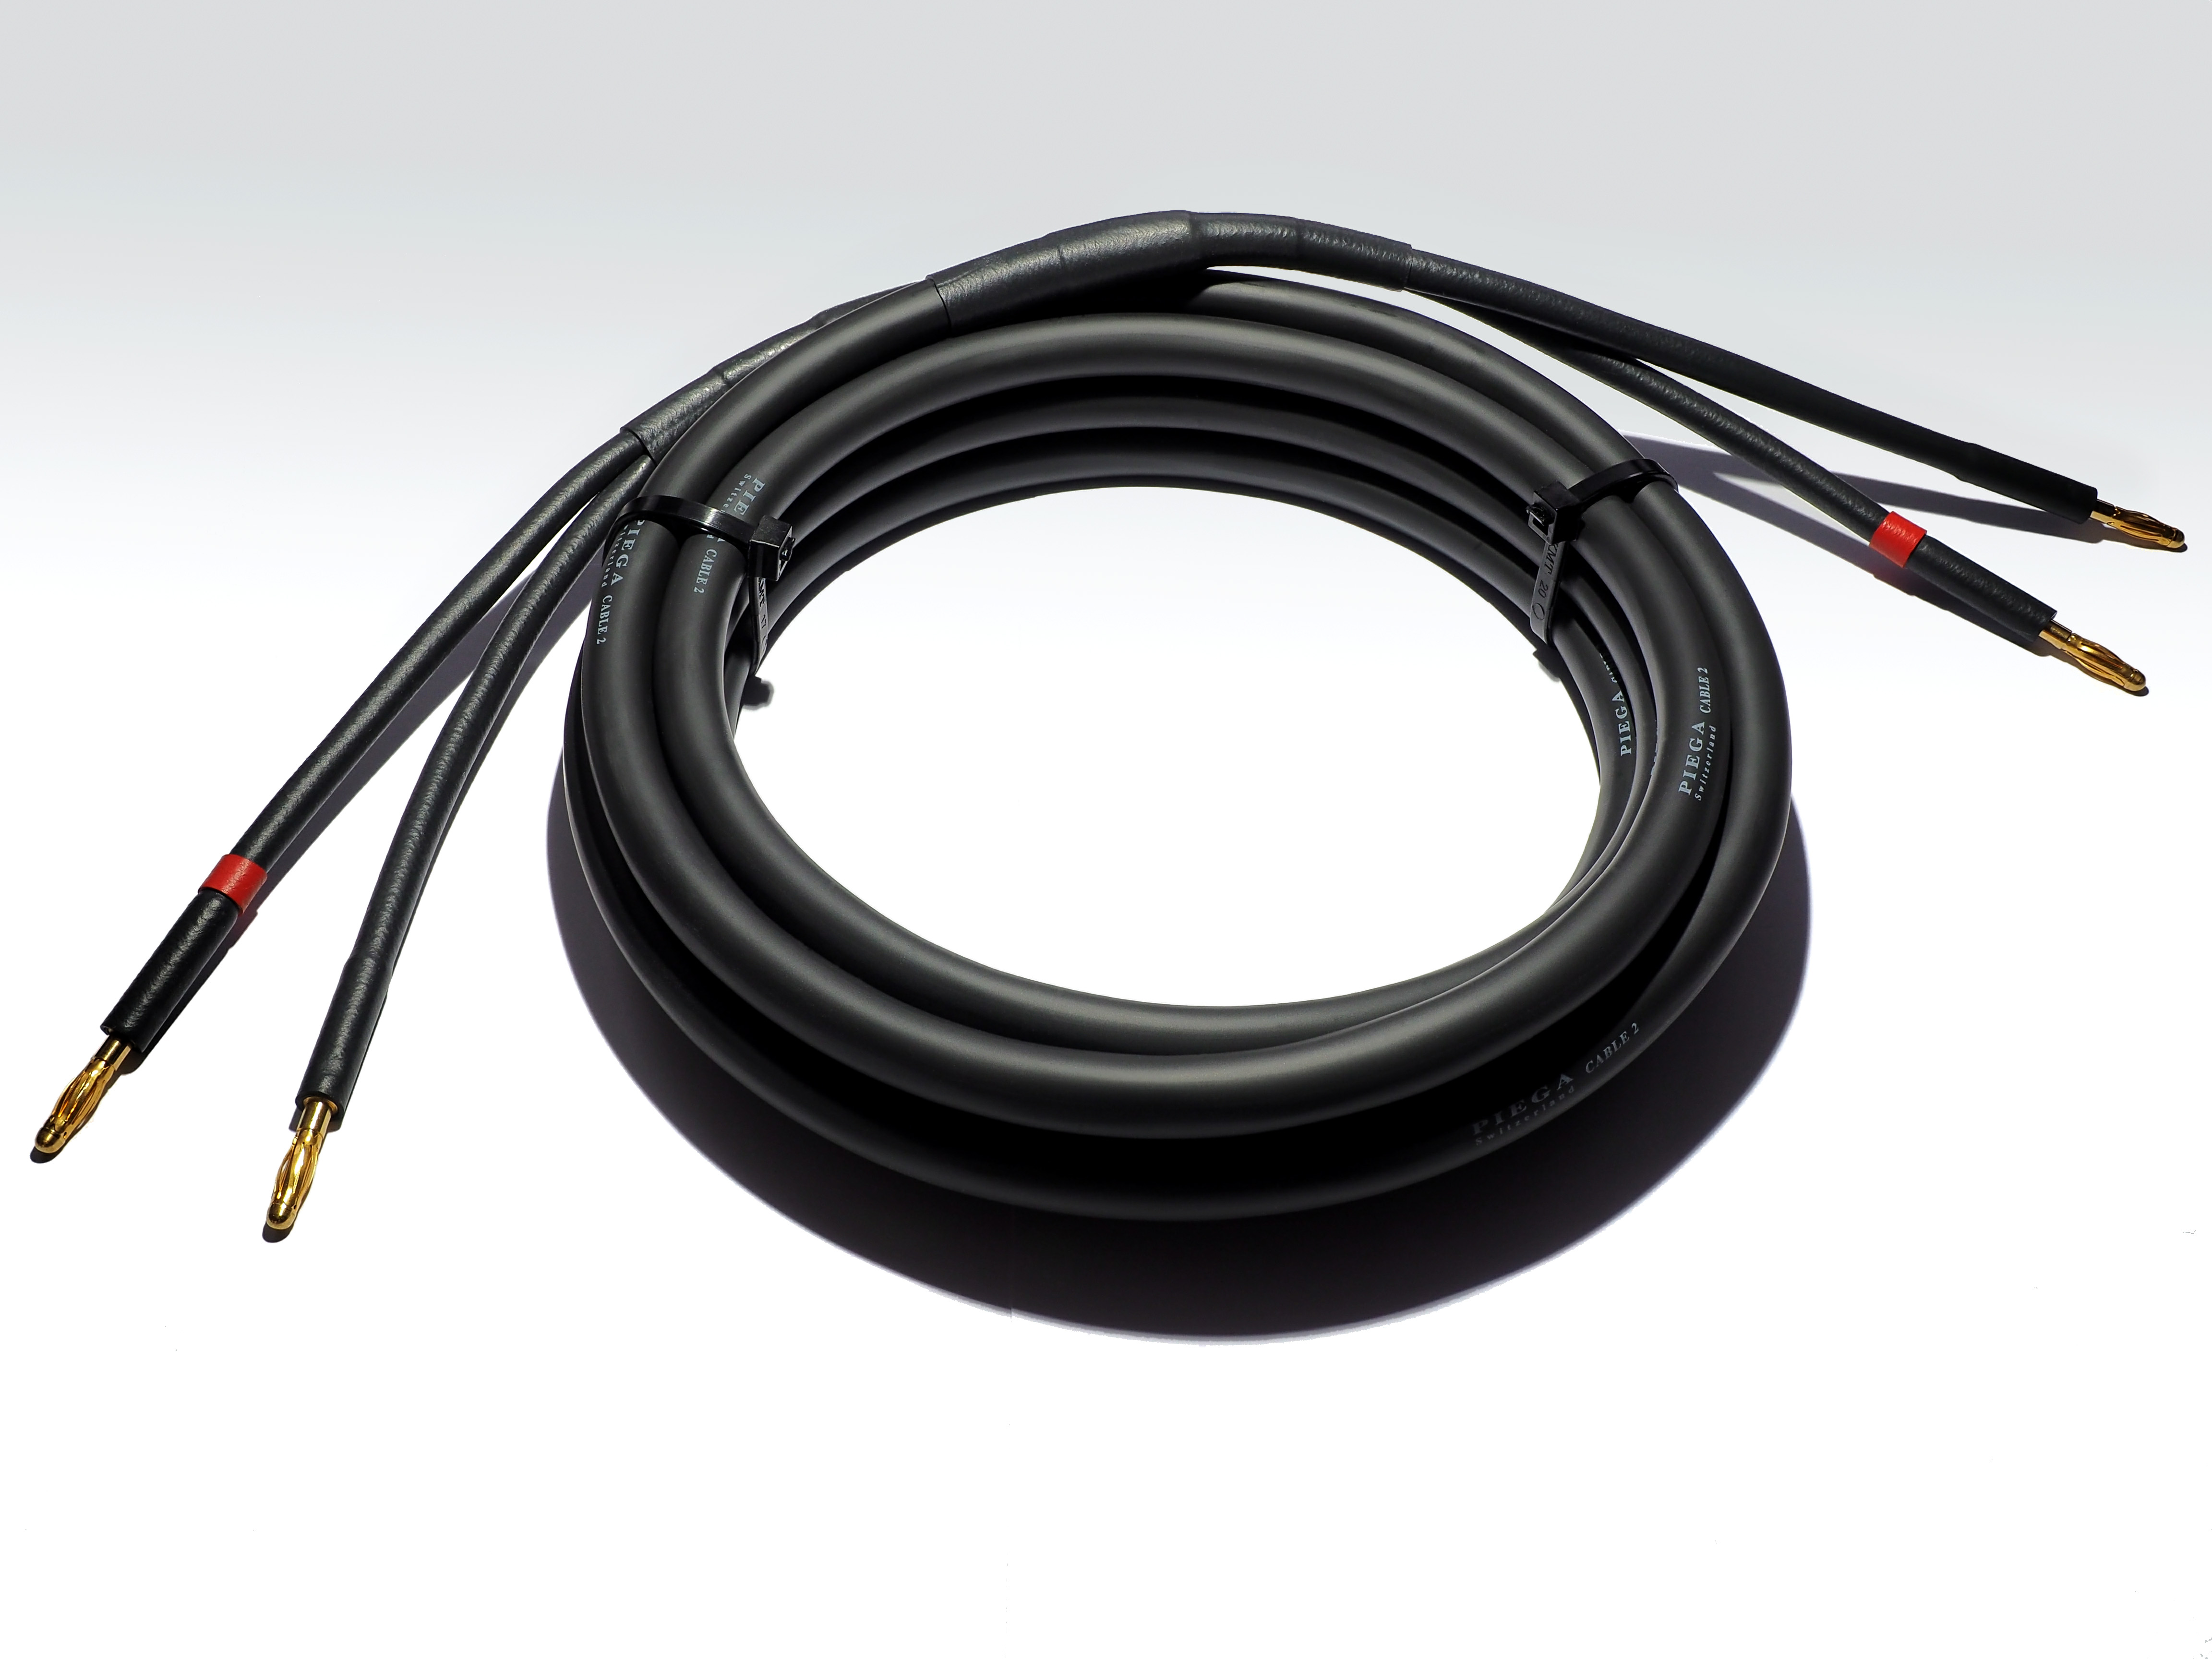 Piega Cable Two 2 x 5m / konfektioniert 24 kt. Banana Plugs / Single-Wire